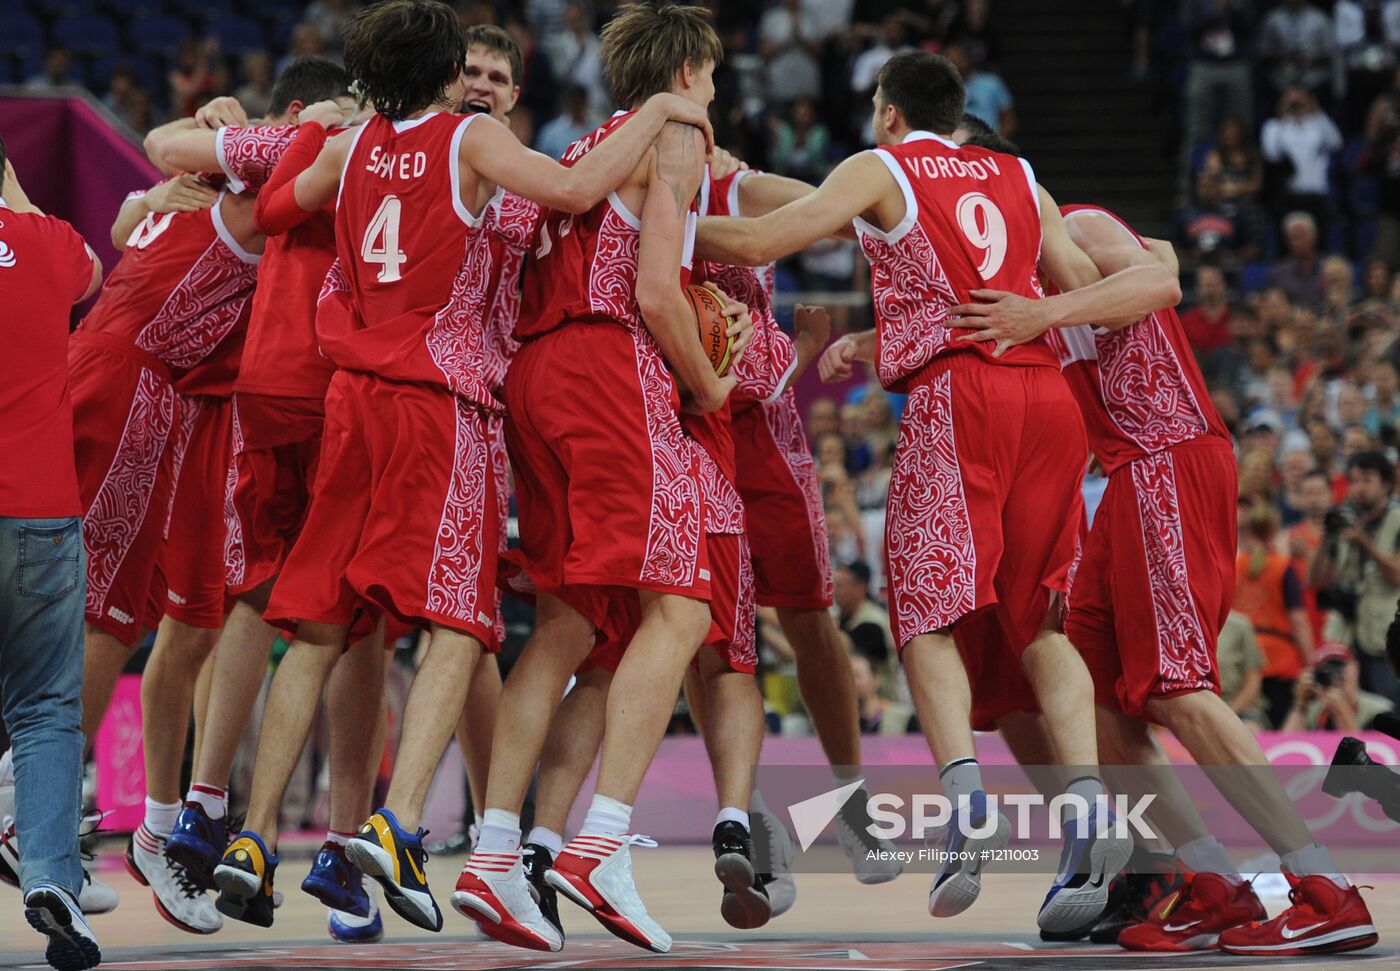 London 2012 Olympics. Men's Basketball. Argentina vs. Russia